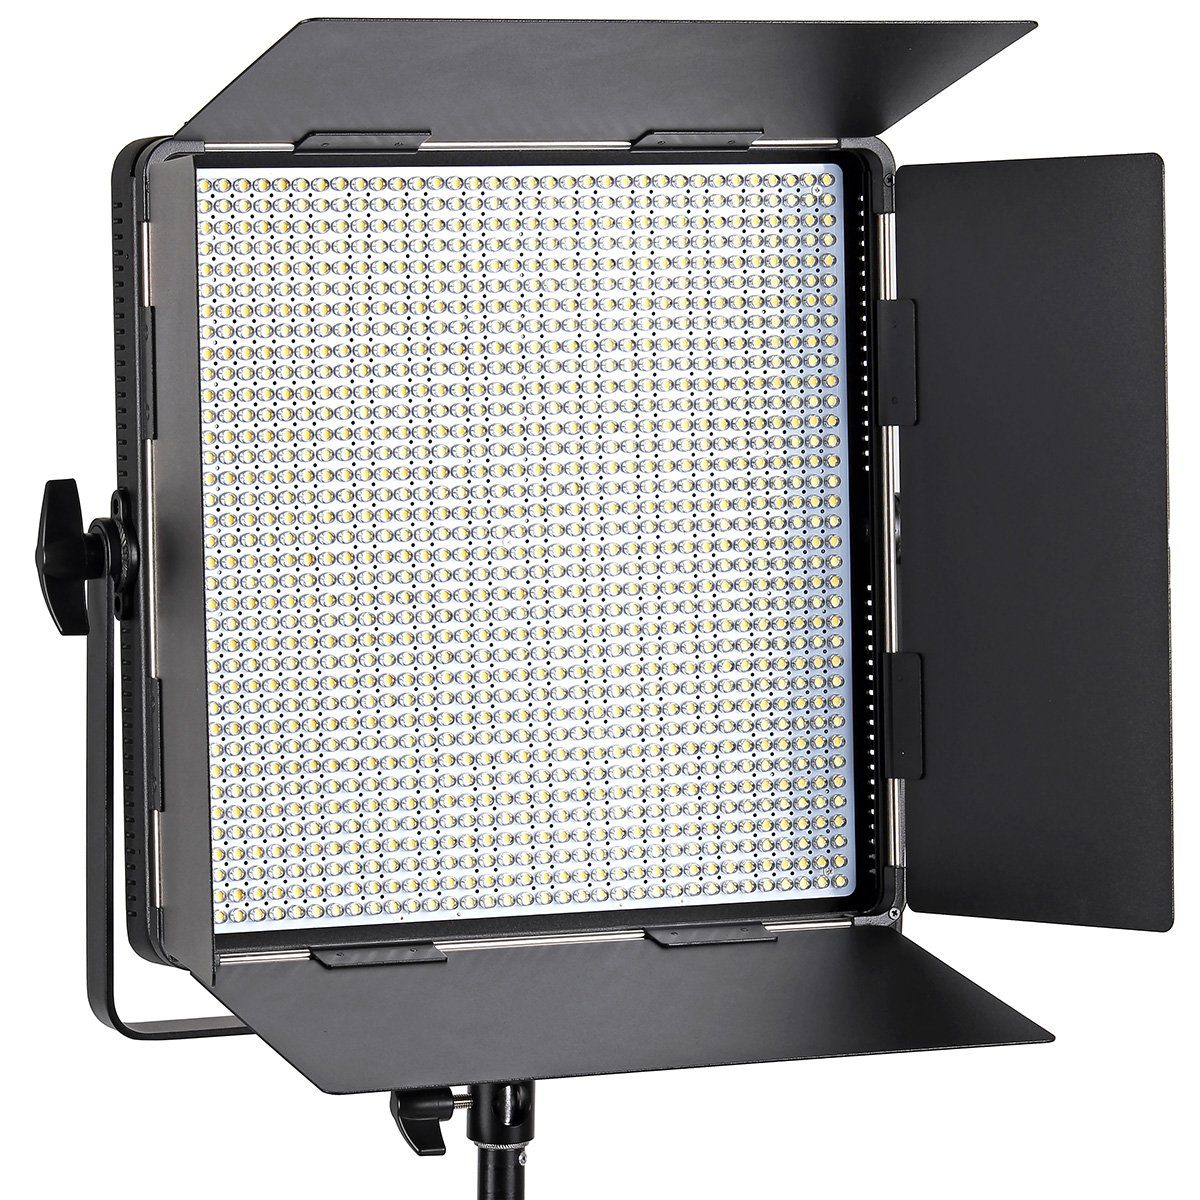 Profi-Videoleuchte LED LEDs inkl. 1296 kompatibel ayex Bilderleuchte DMX Funk-Fernbedienung